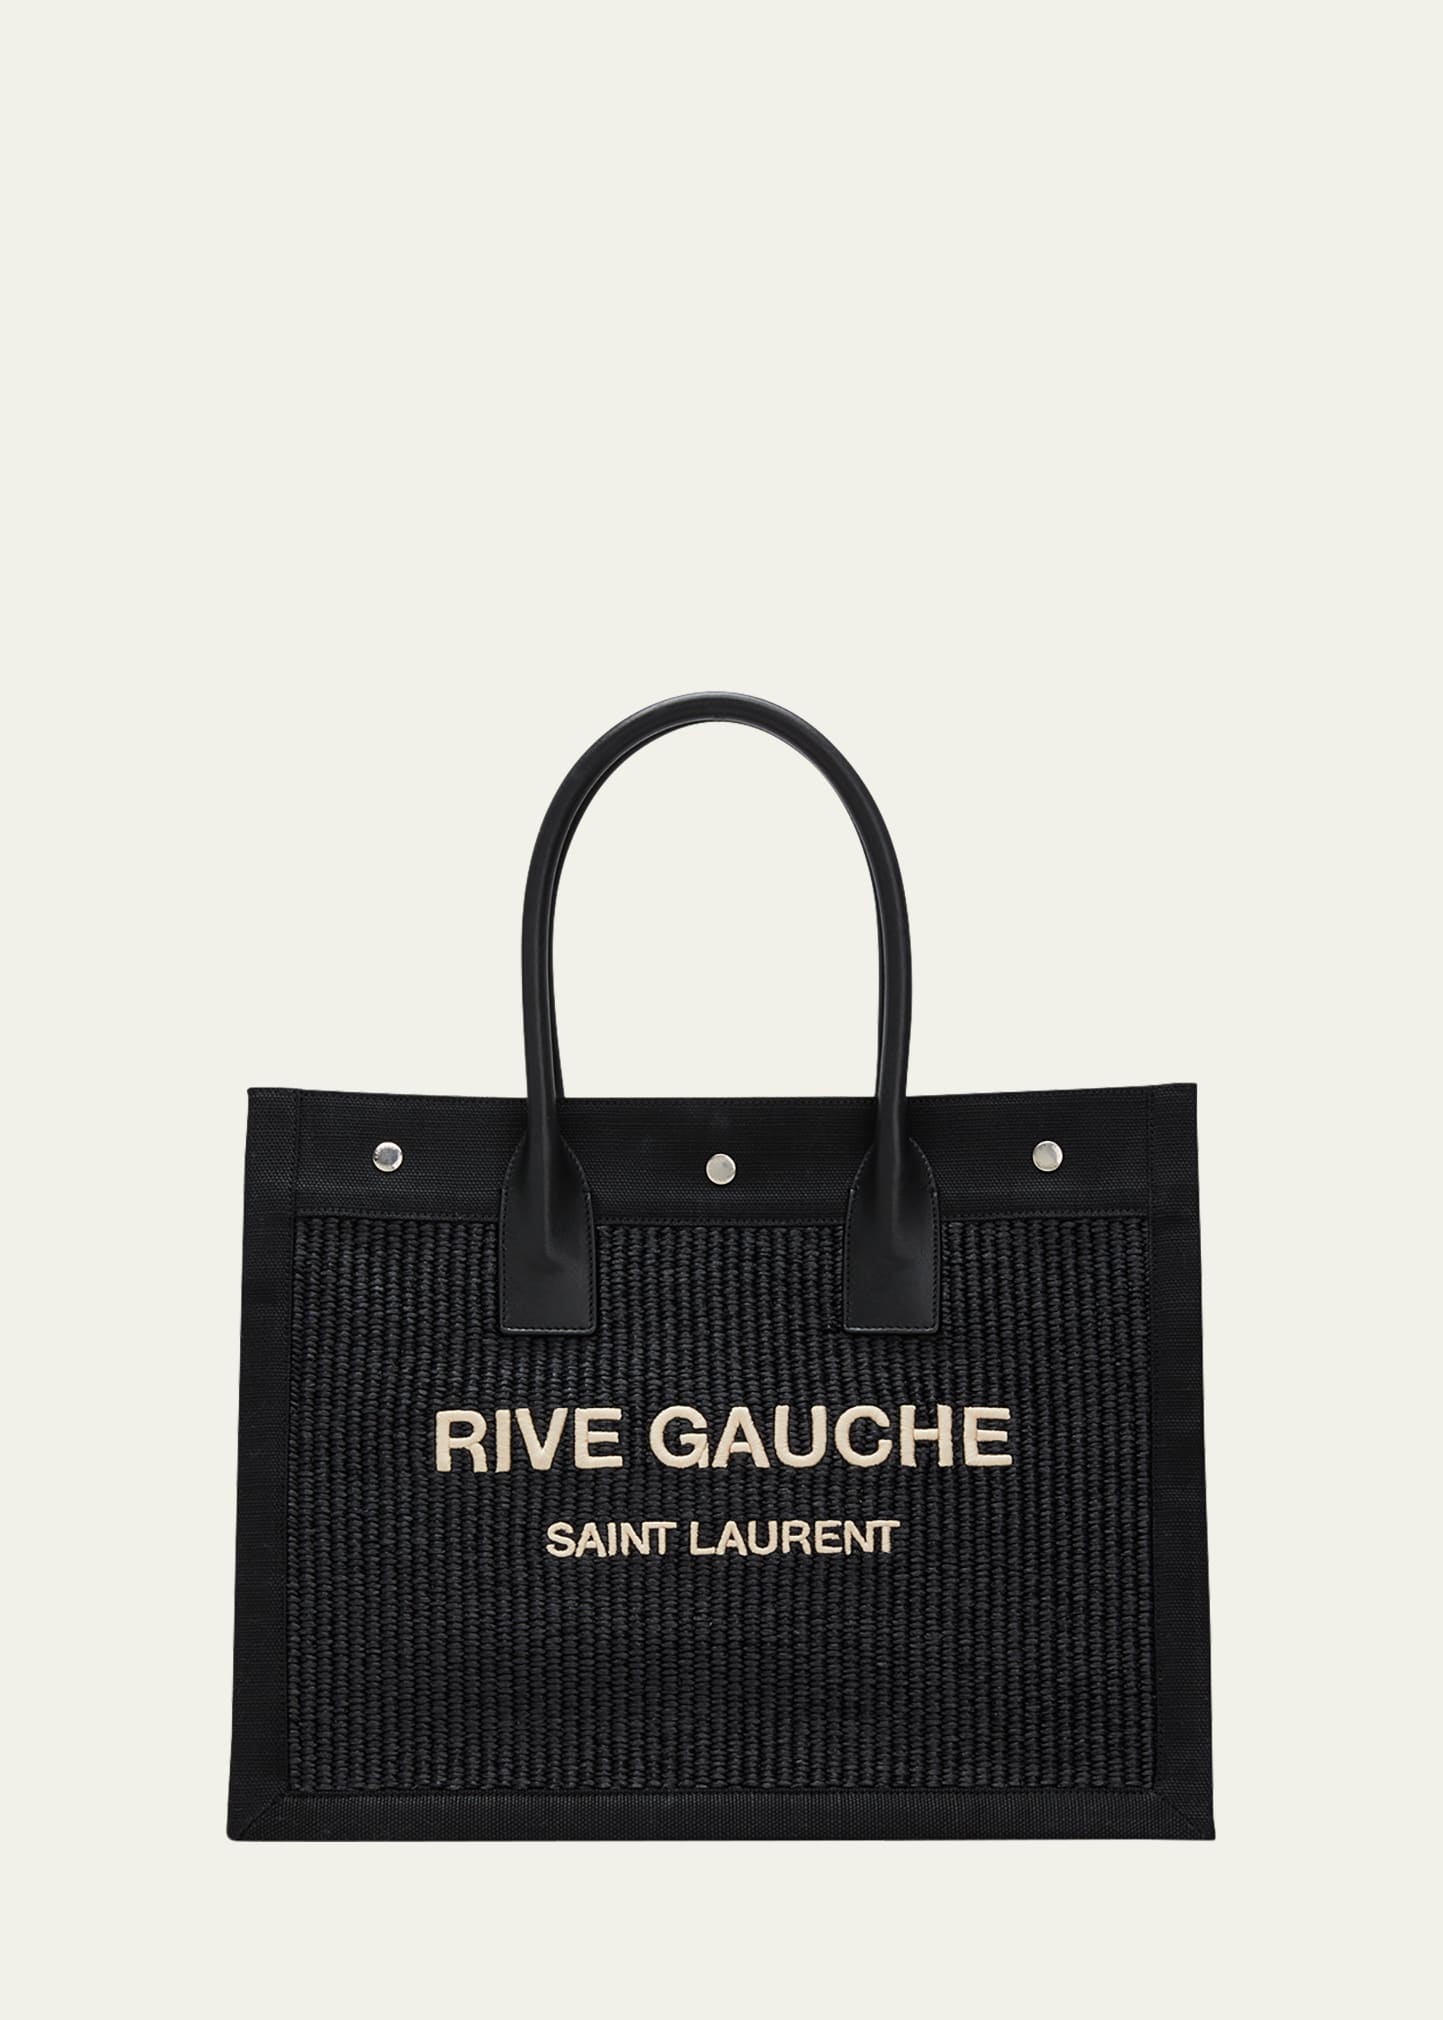 Saint Laurent Women's Rive Gauche Small Tote Bag In Raffia And Leather In Black/white